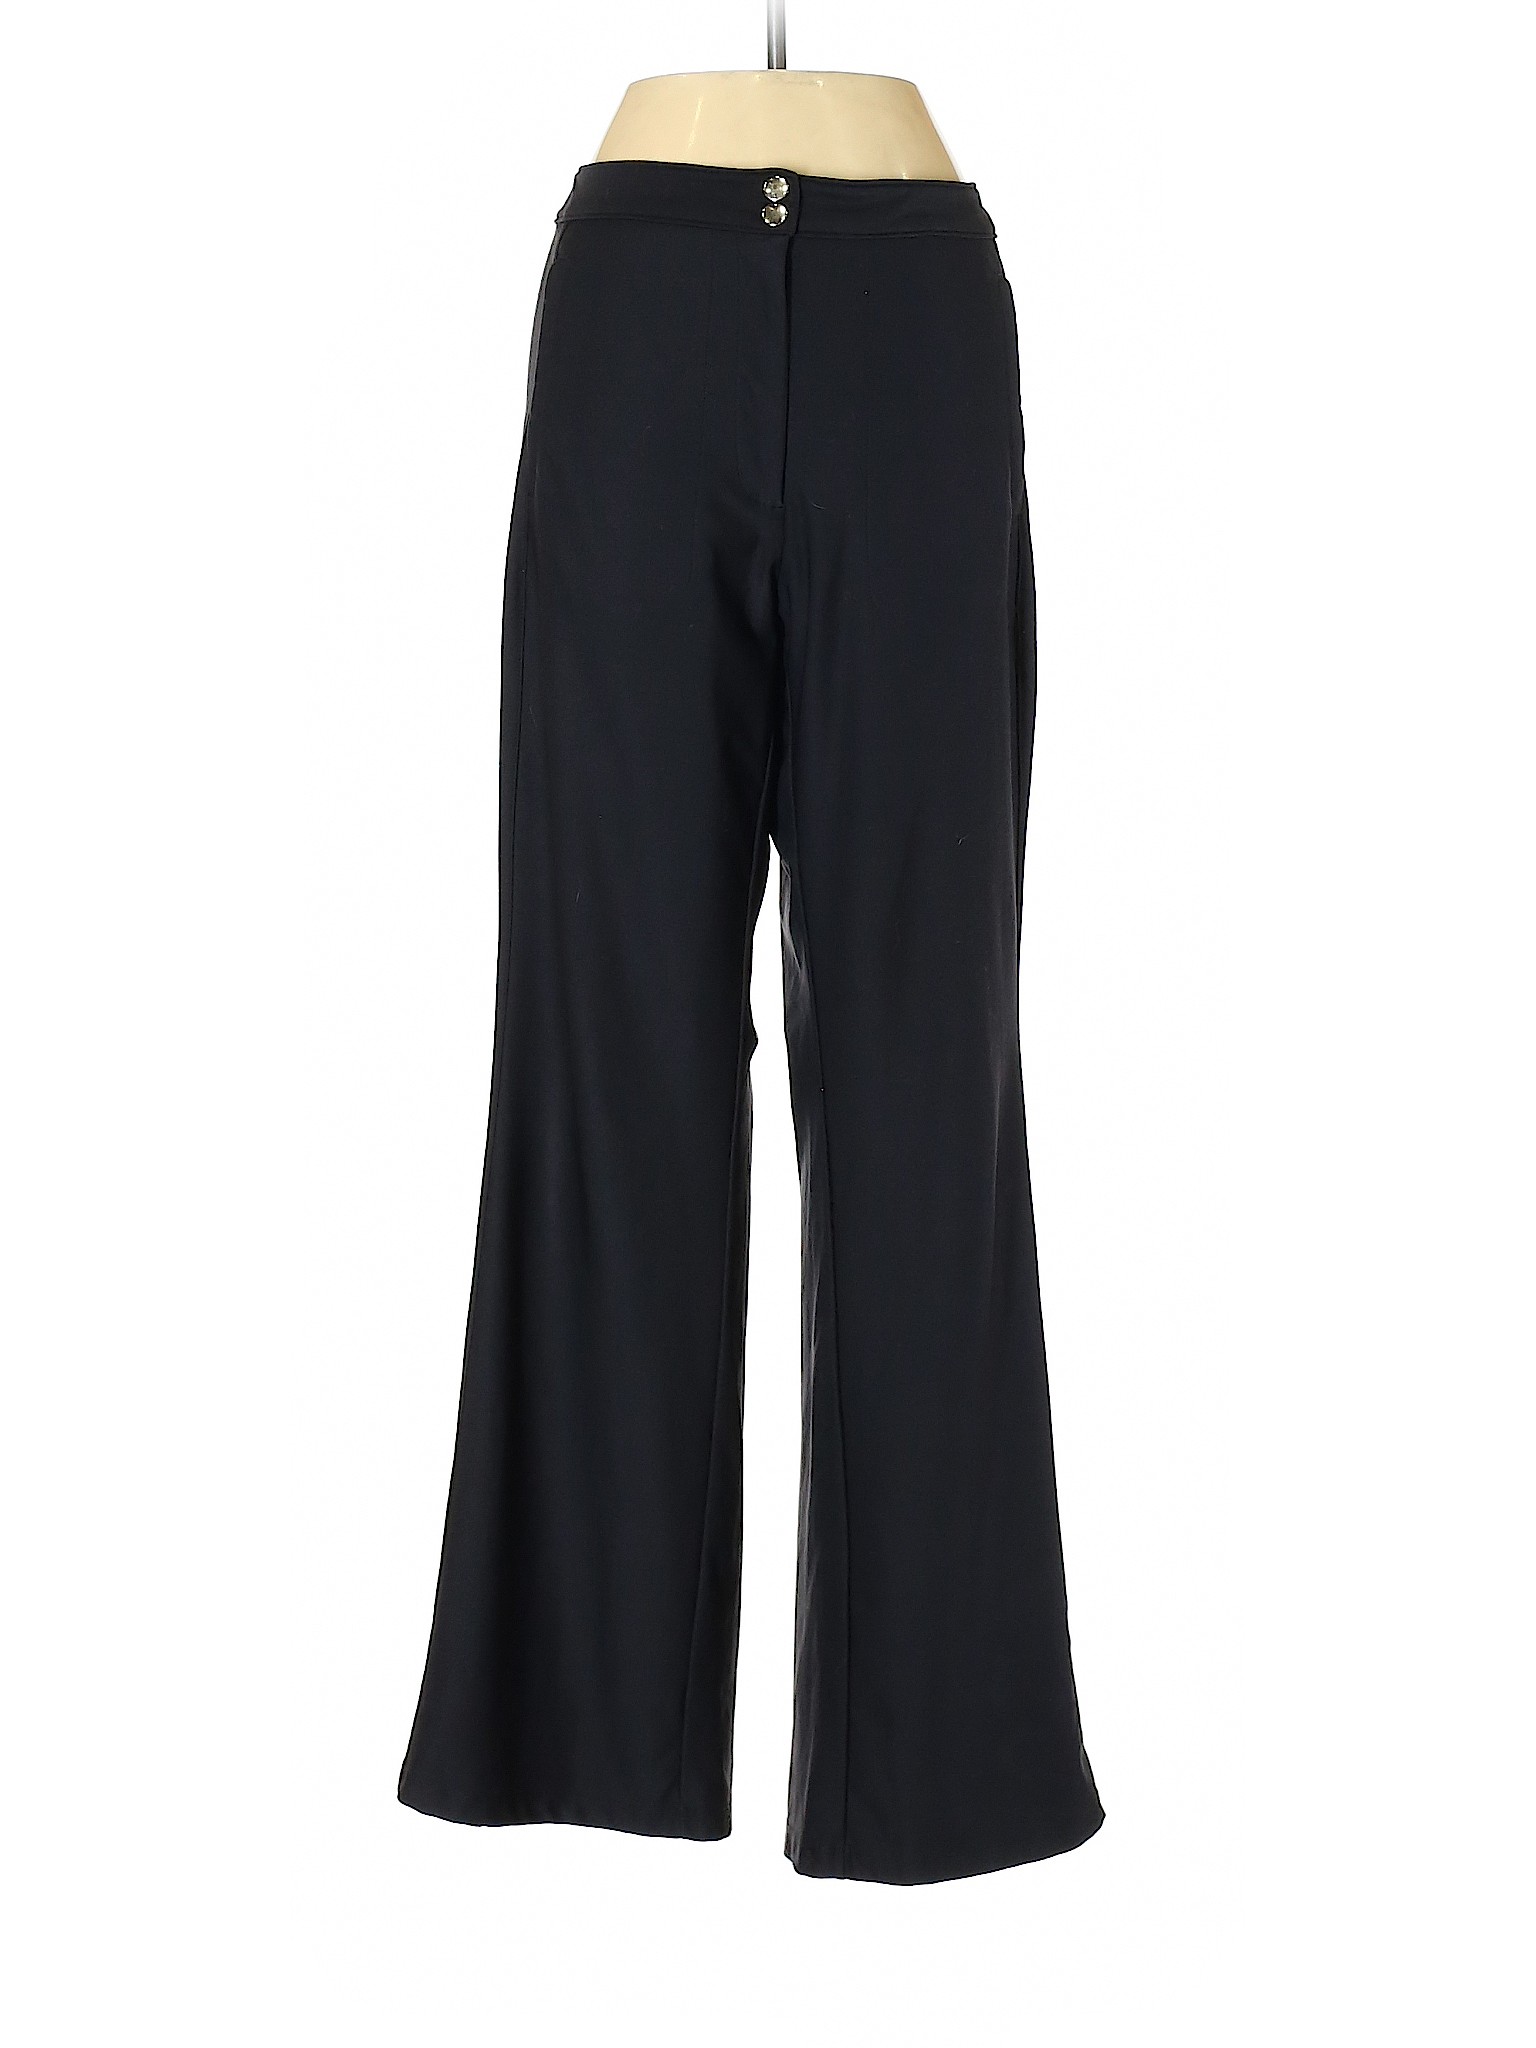 L.L.Bean Women Black Casual Pants S | eBay